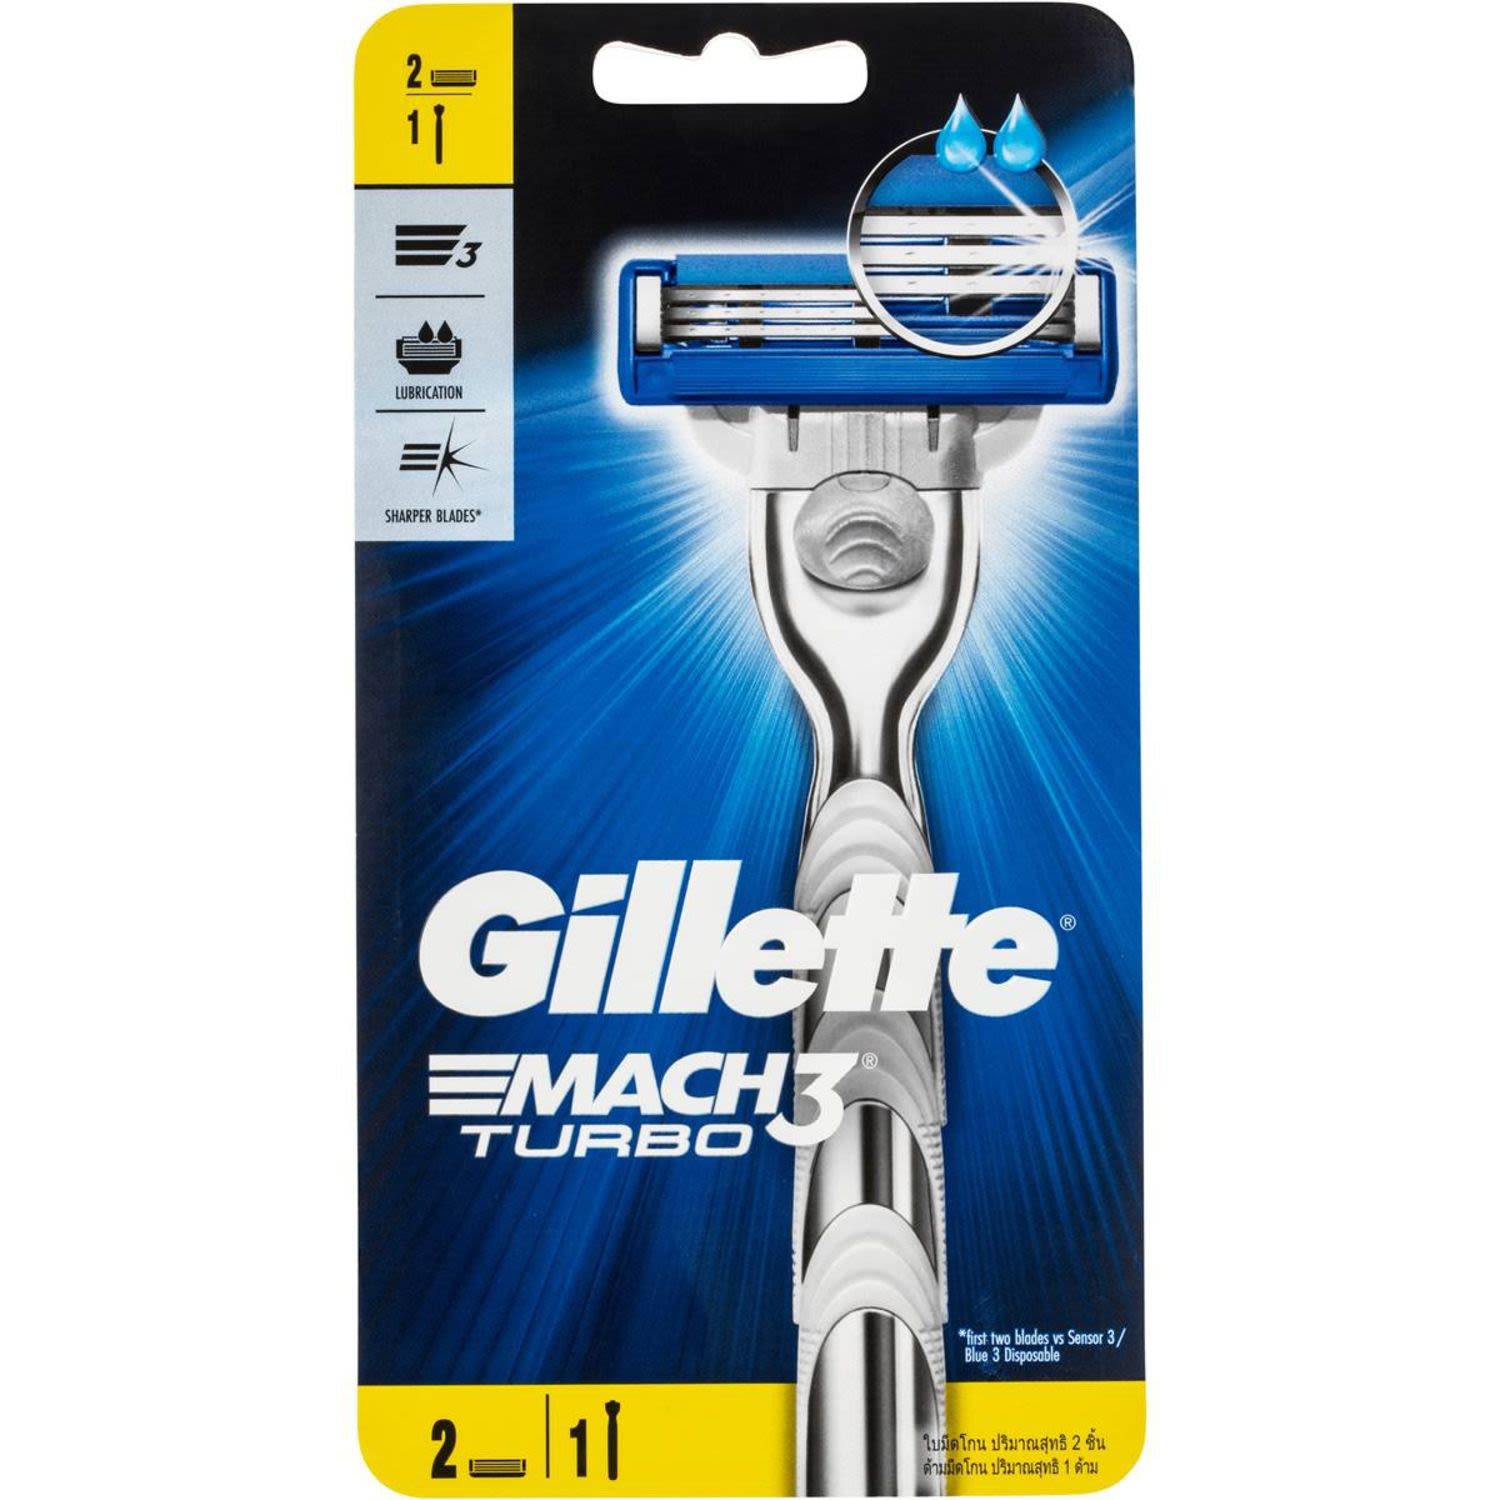 Gillette Mach 3 Turbo Shaving Razor & Blade, 1 Each